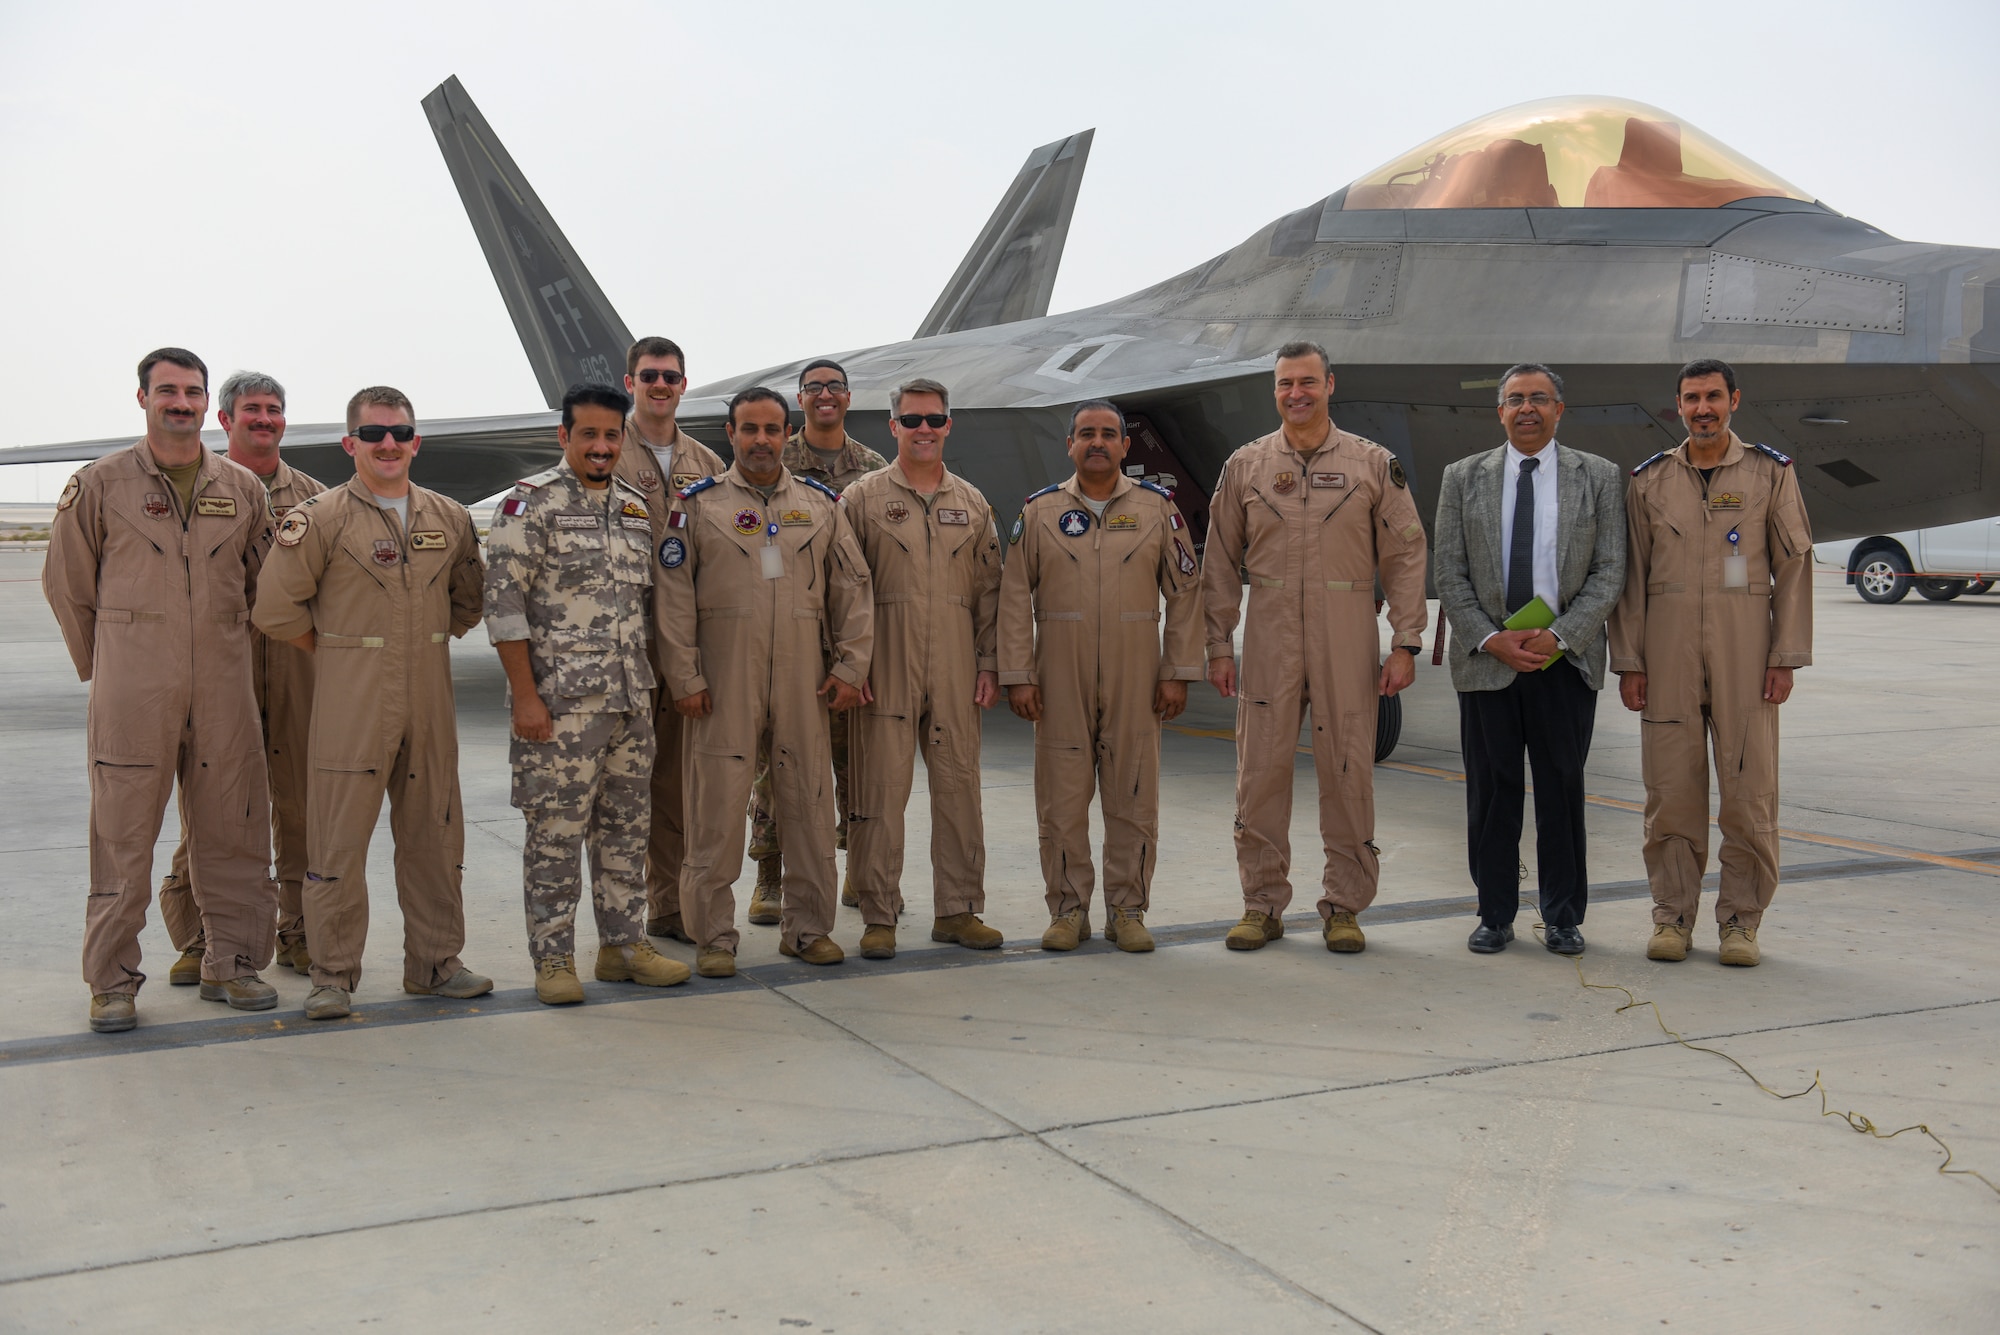 Qatar Emiri Air Force senior leaders, U.S. Air Forces Central Command senior leaders, and U.S. Air Force F-22 Raptor pilots pose for a group photo during a visit to Al Udeid Air Base Qatar, Nov 10, 2019.